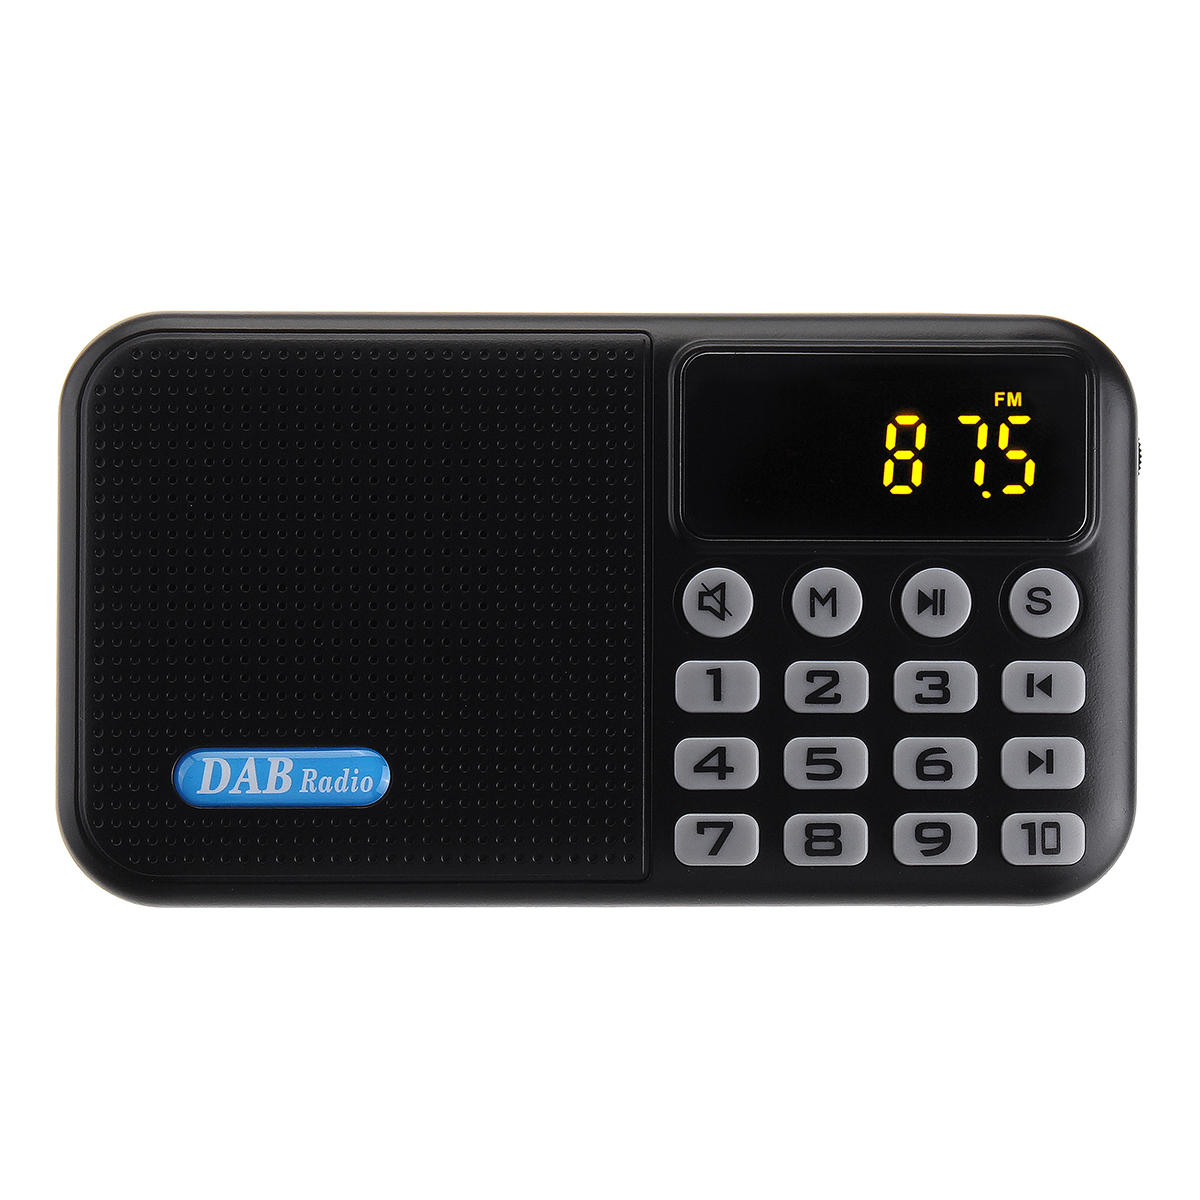 DAB portátil Plus DAB FM Digital Radio Receptor Altavoz de música Reproductor de MP3 Soporte USB AUX TF Tarjeta